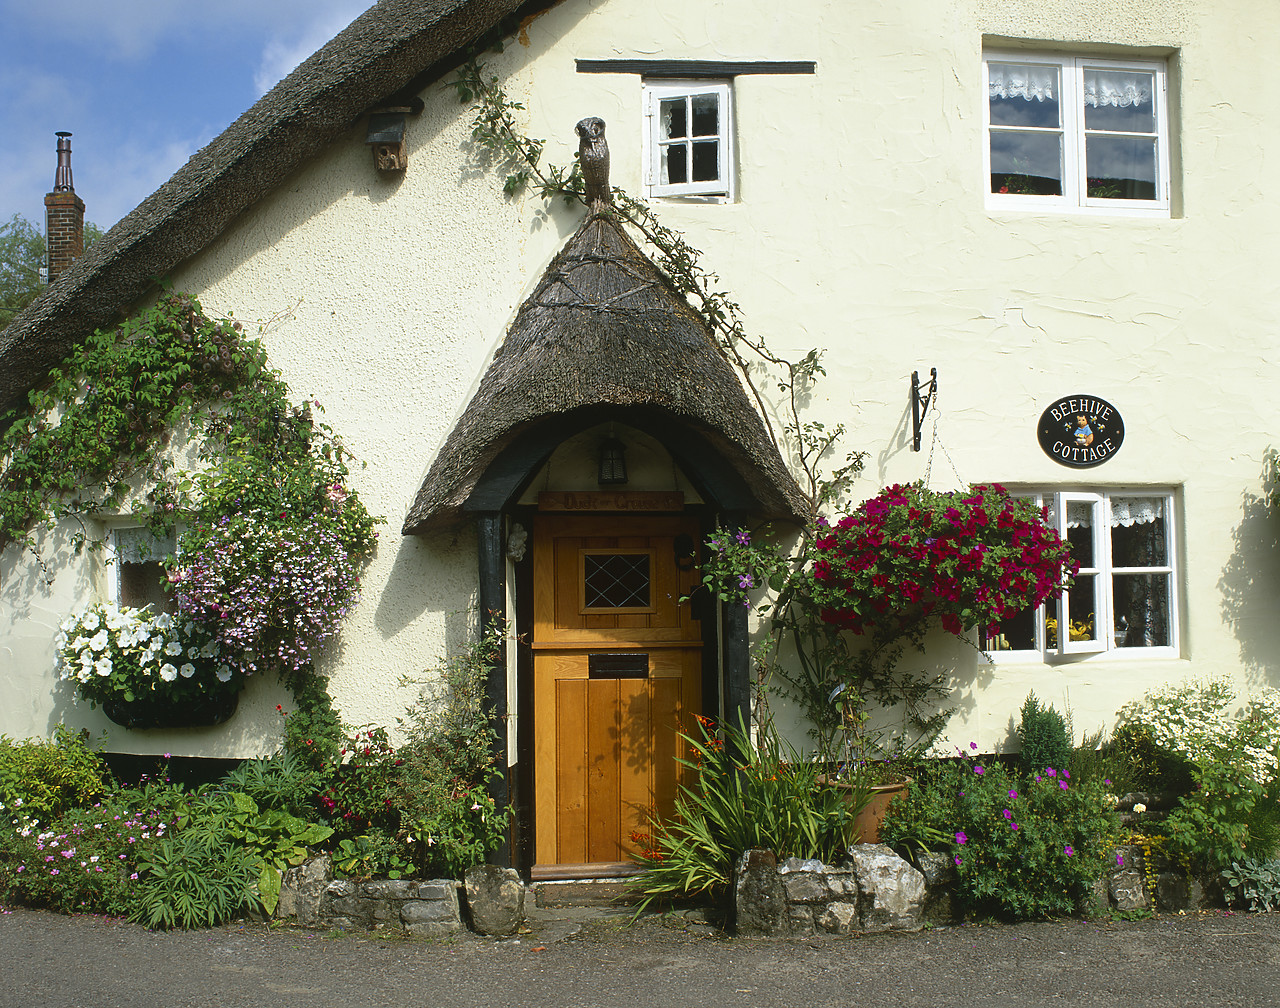 #020660-1 - Beehive Cottage, Branscombe, Devon, England